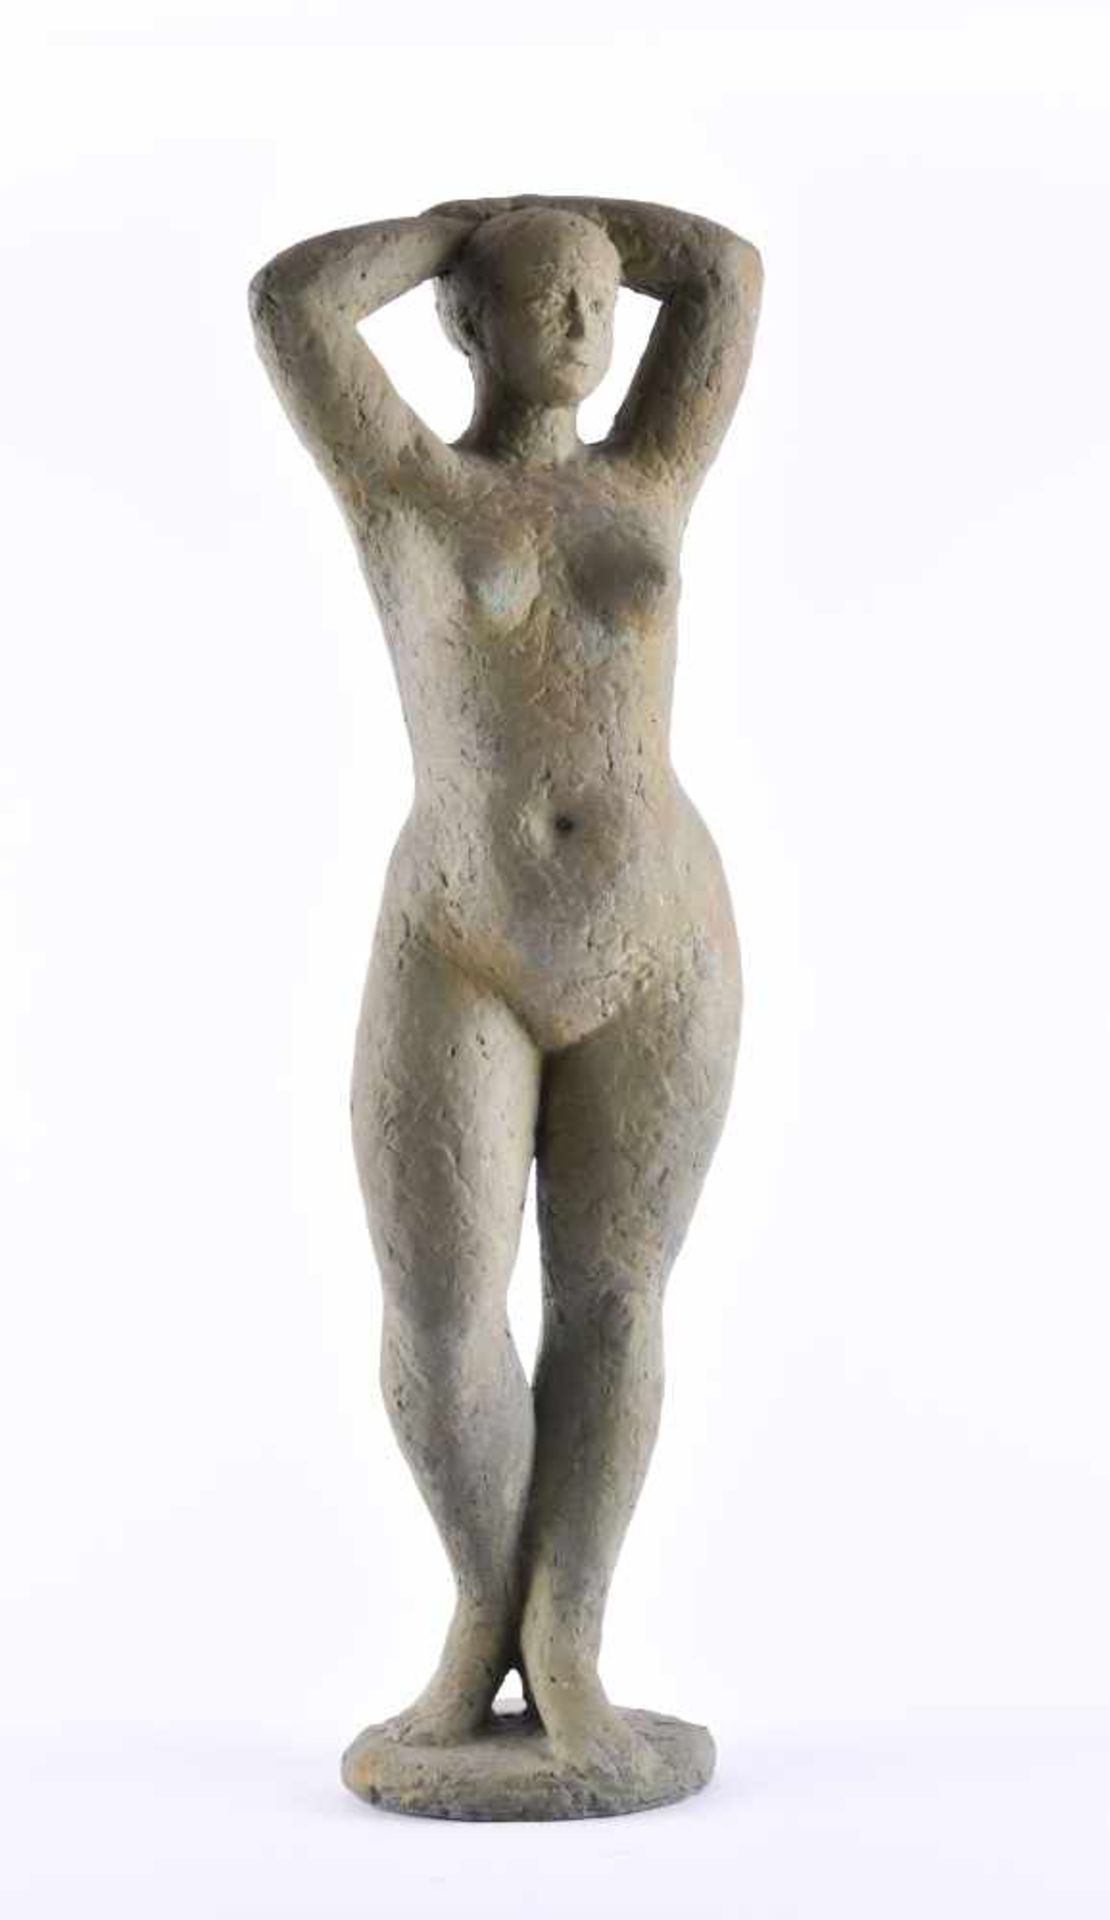 Rolf WINKLER (1930-2001)"Stehende"sculpture - stone casting, height: 60 cm,monogrammed on the